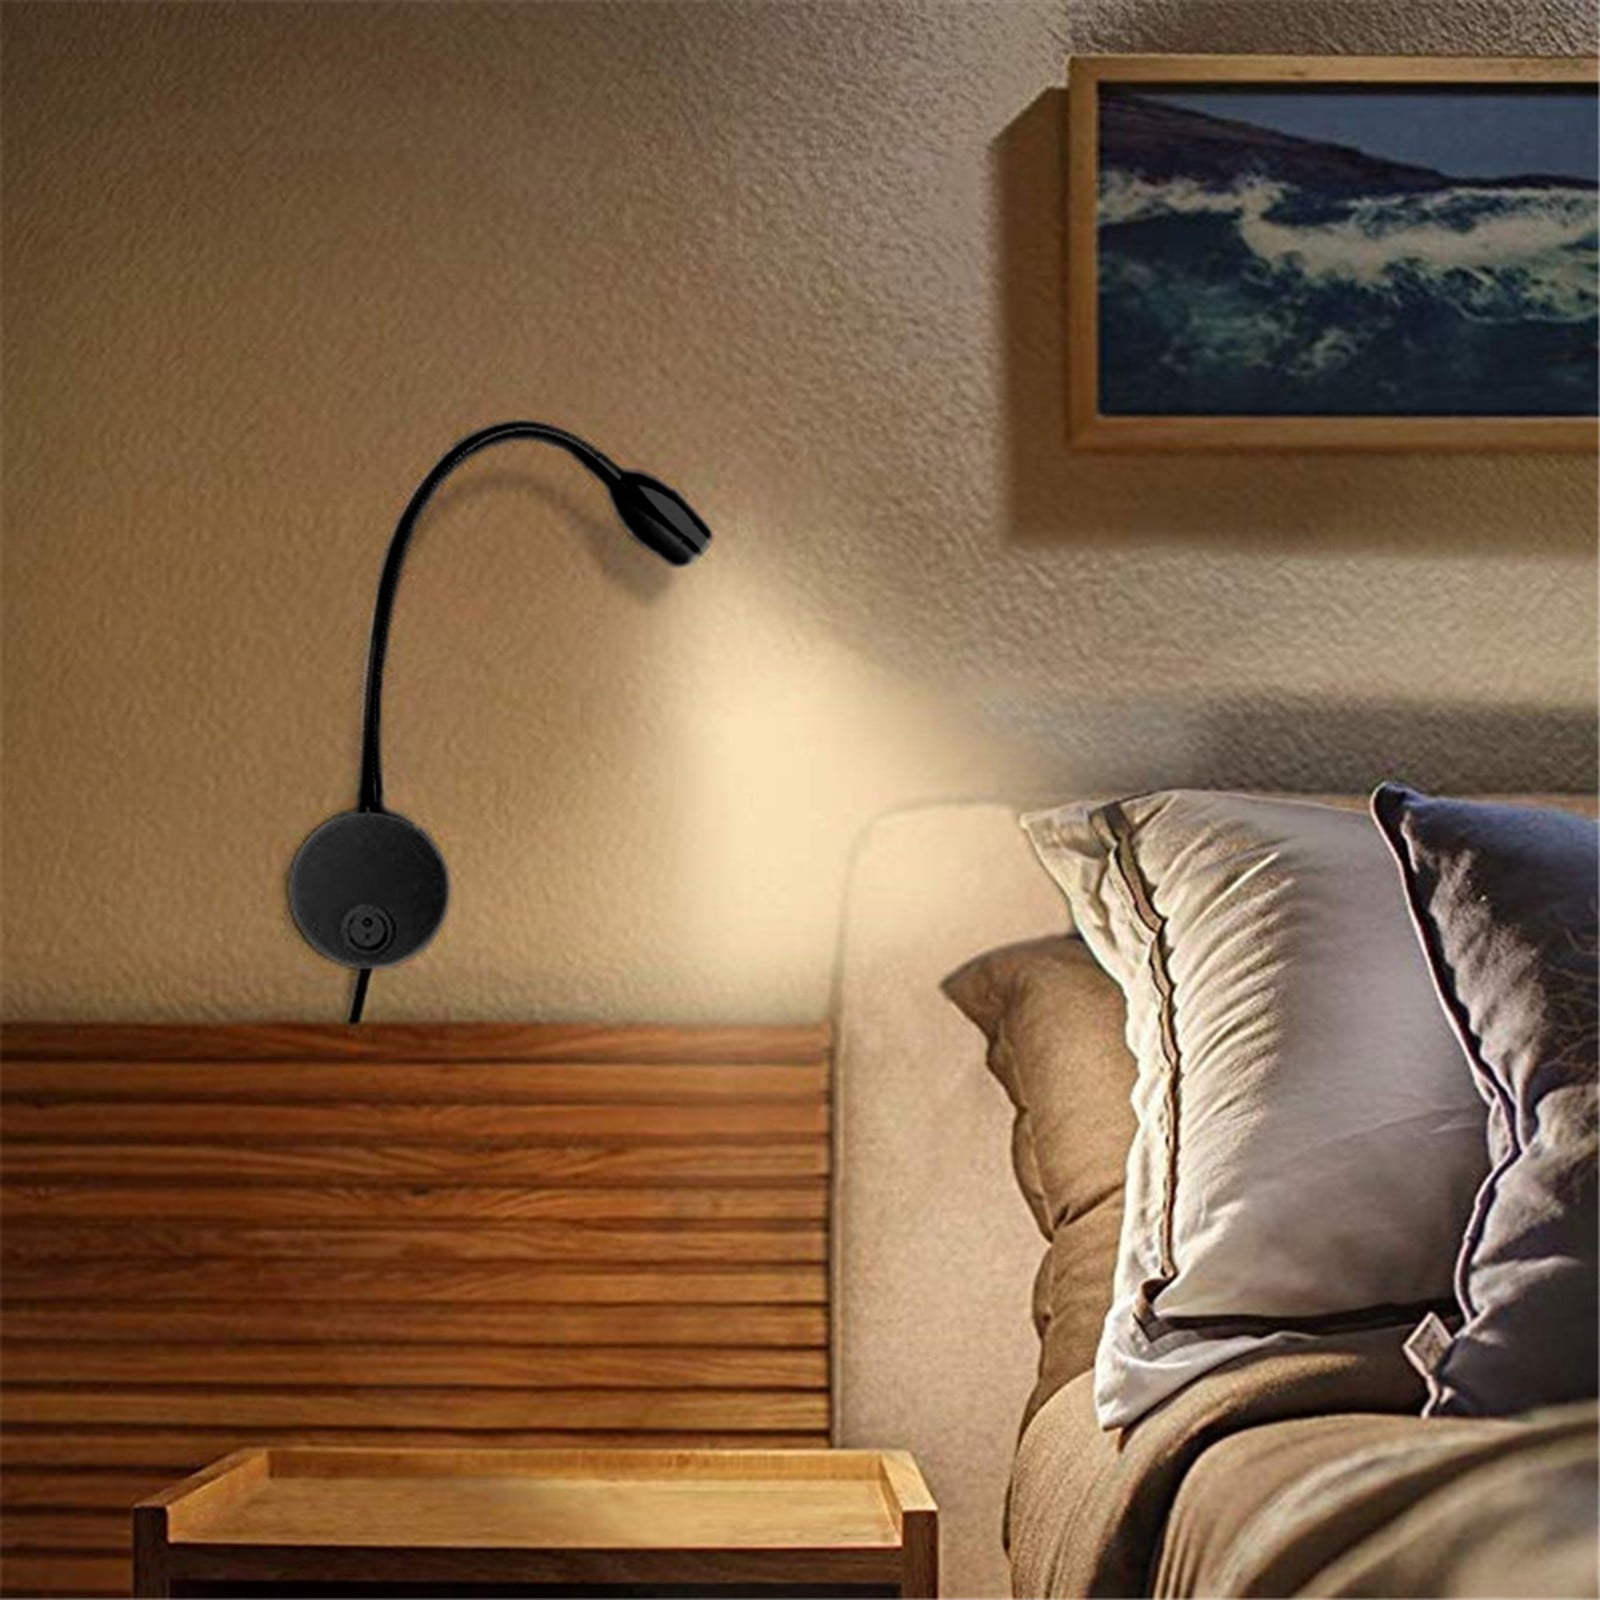 Reading Light for Bed Headboard, Bed Reading Lamp, Bedside Reading Light,  Wall Mounted Reading Light, Headboard Lamp, DC 5V-240V 3W LED Touch